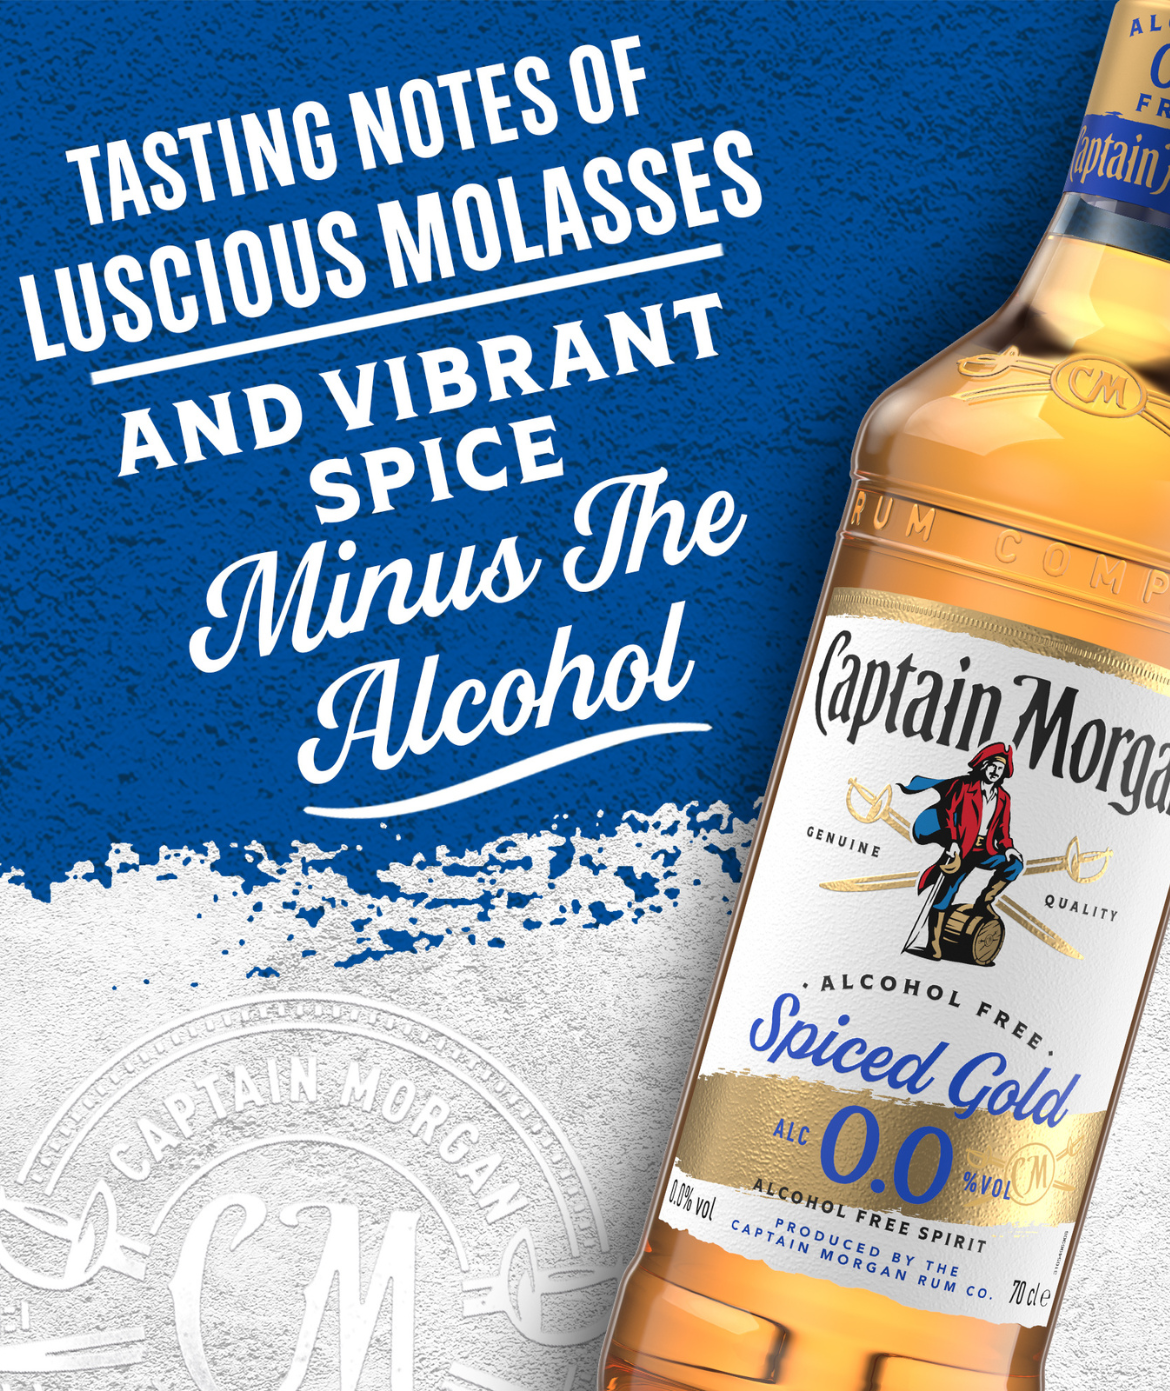 Morgan 70cl 0.0 Free Spirit, Bar Captain Spiced | The Gold Alcohol